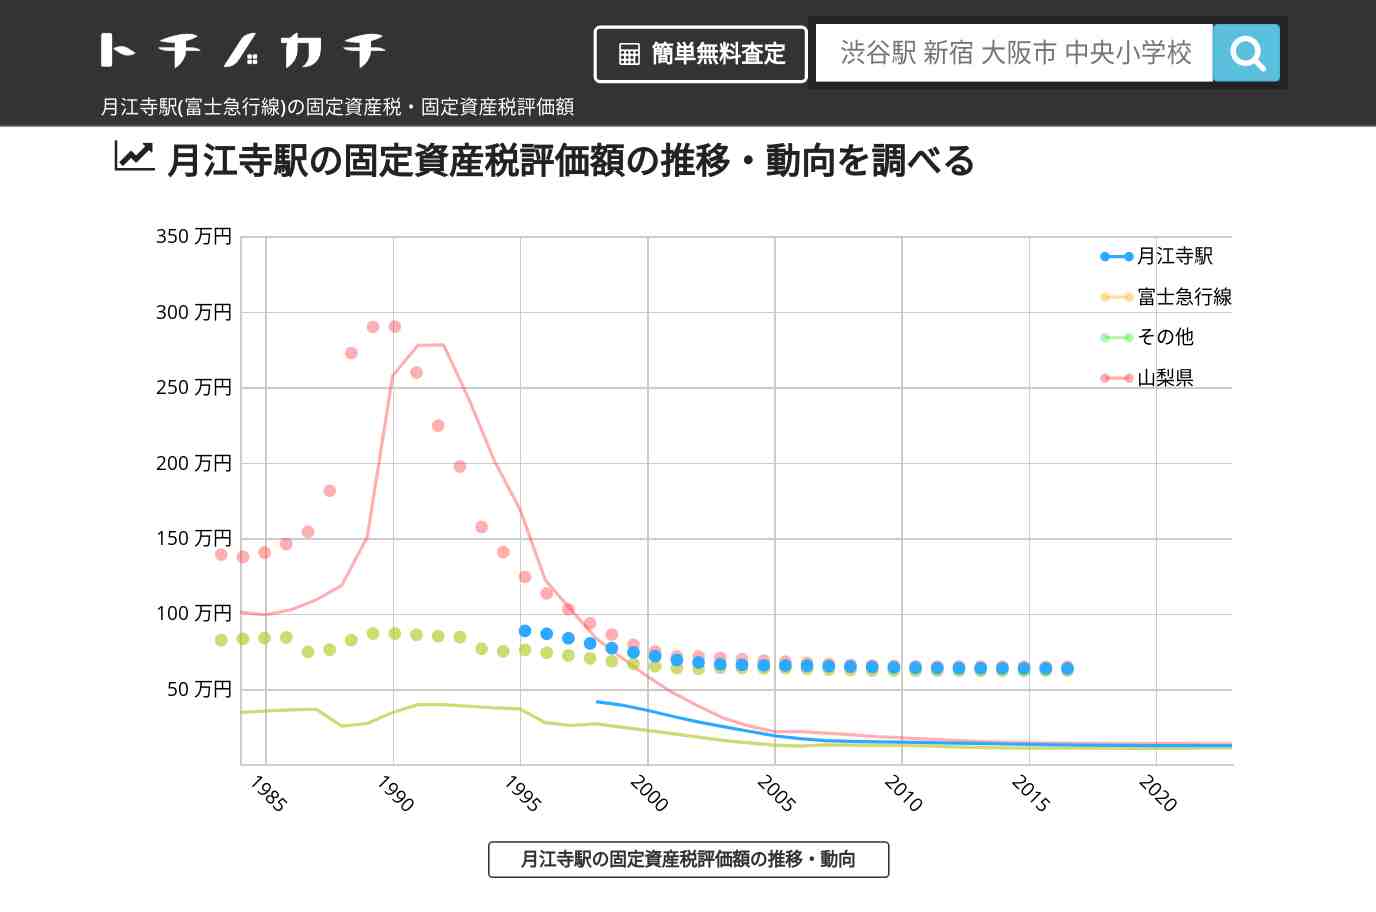 月江寺駅(富士急行線)の固定資産税・固定資産税評価額 | トチノカチ